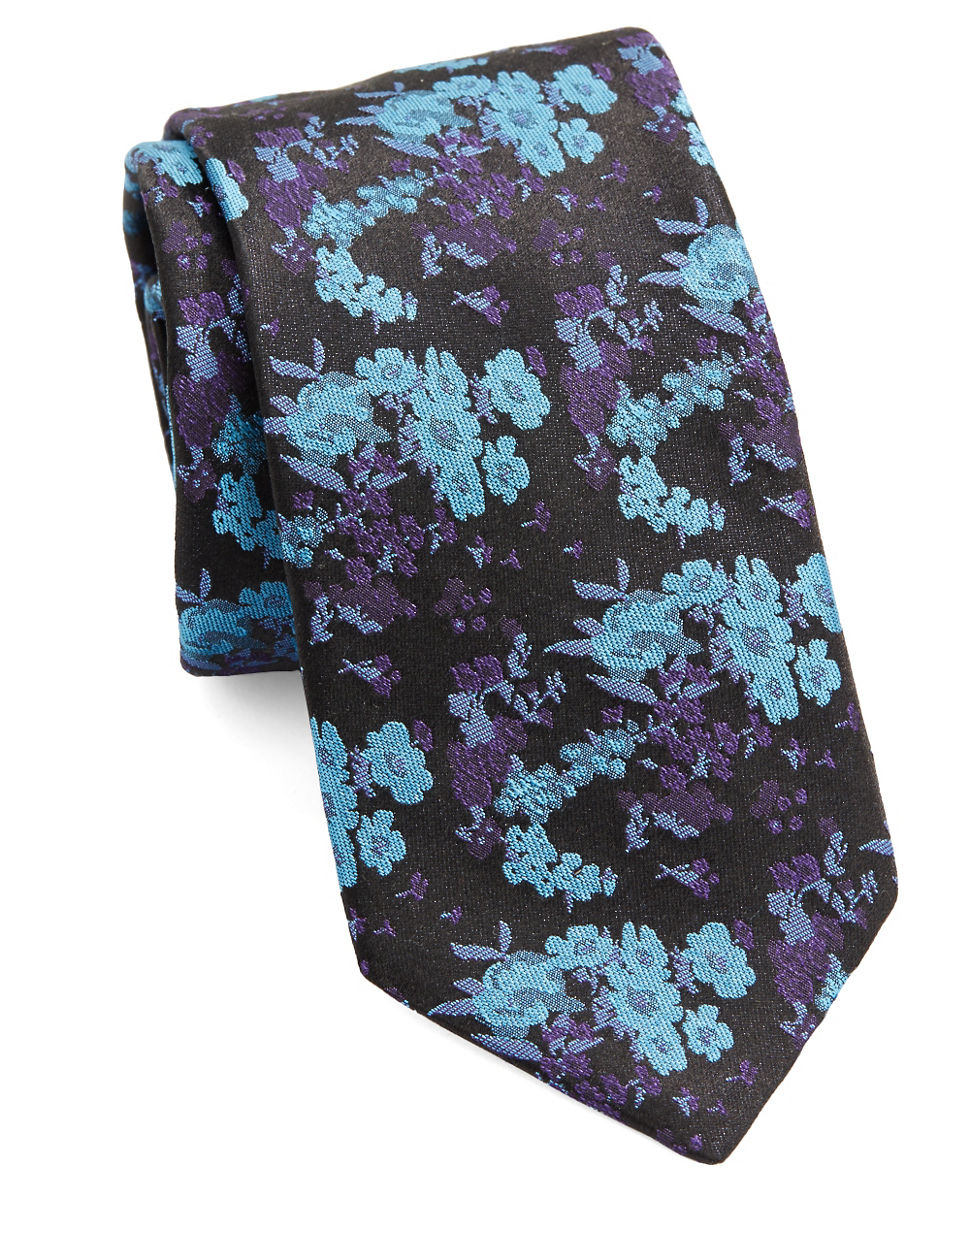 Lyst - Ted Baker Floral Silk Tie in Black for Men